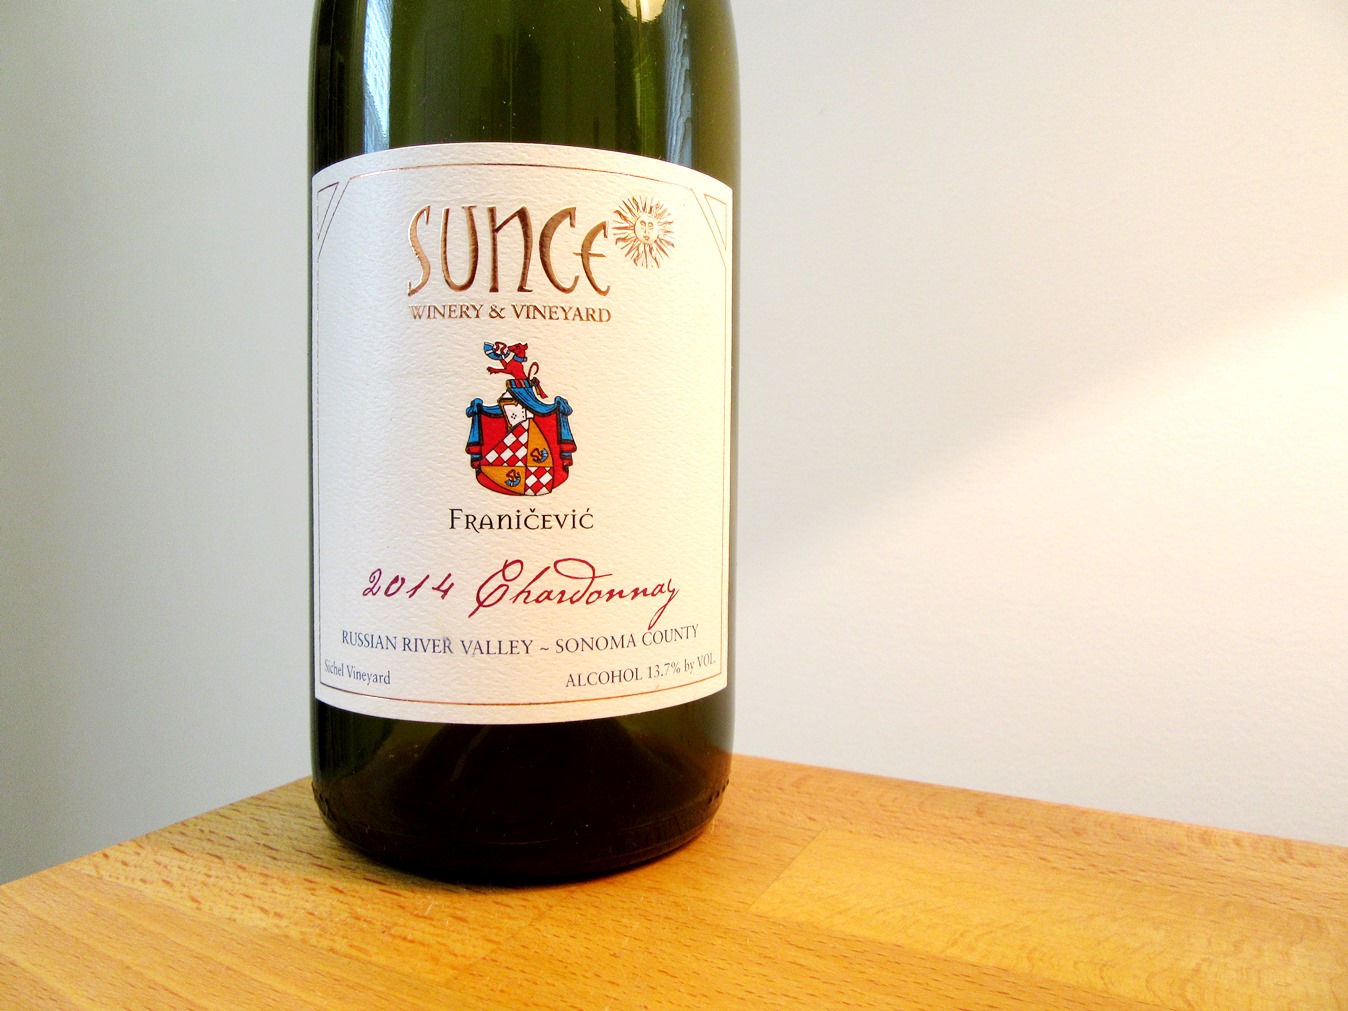 Sunce Winery & Vineyard, Chardonnay 2014, Sichel Vineyard, Russian River Valley, Sonoma County, California, Wine Casual